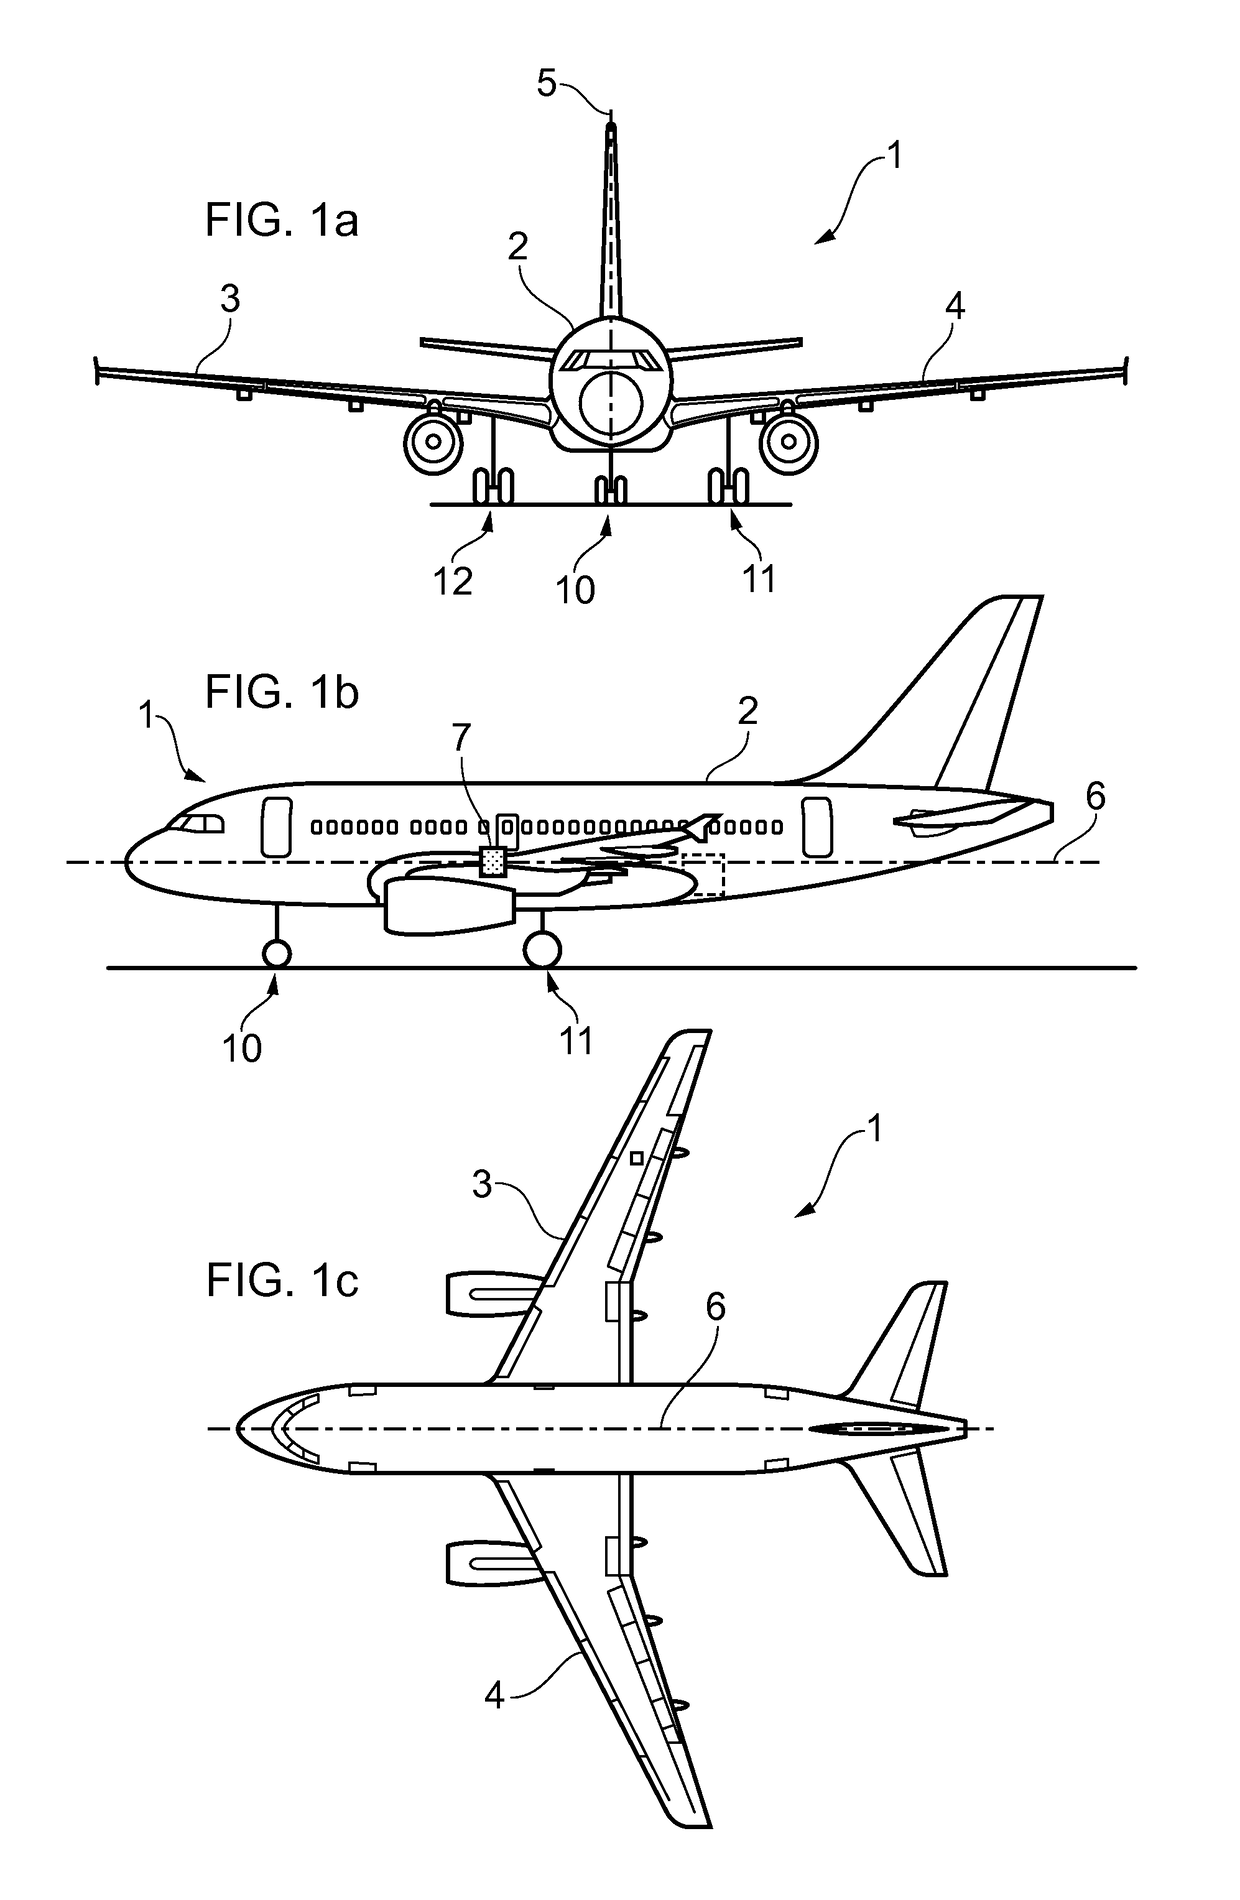 Differential braking of aircraft landing gear wheels